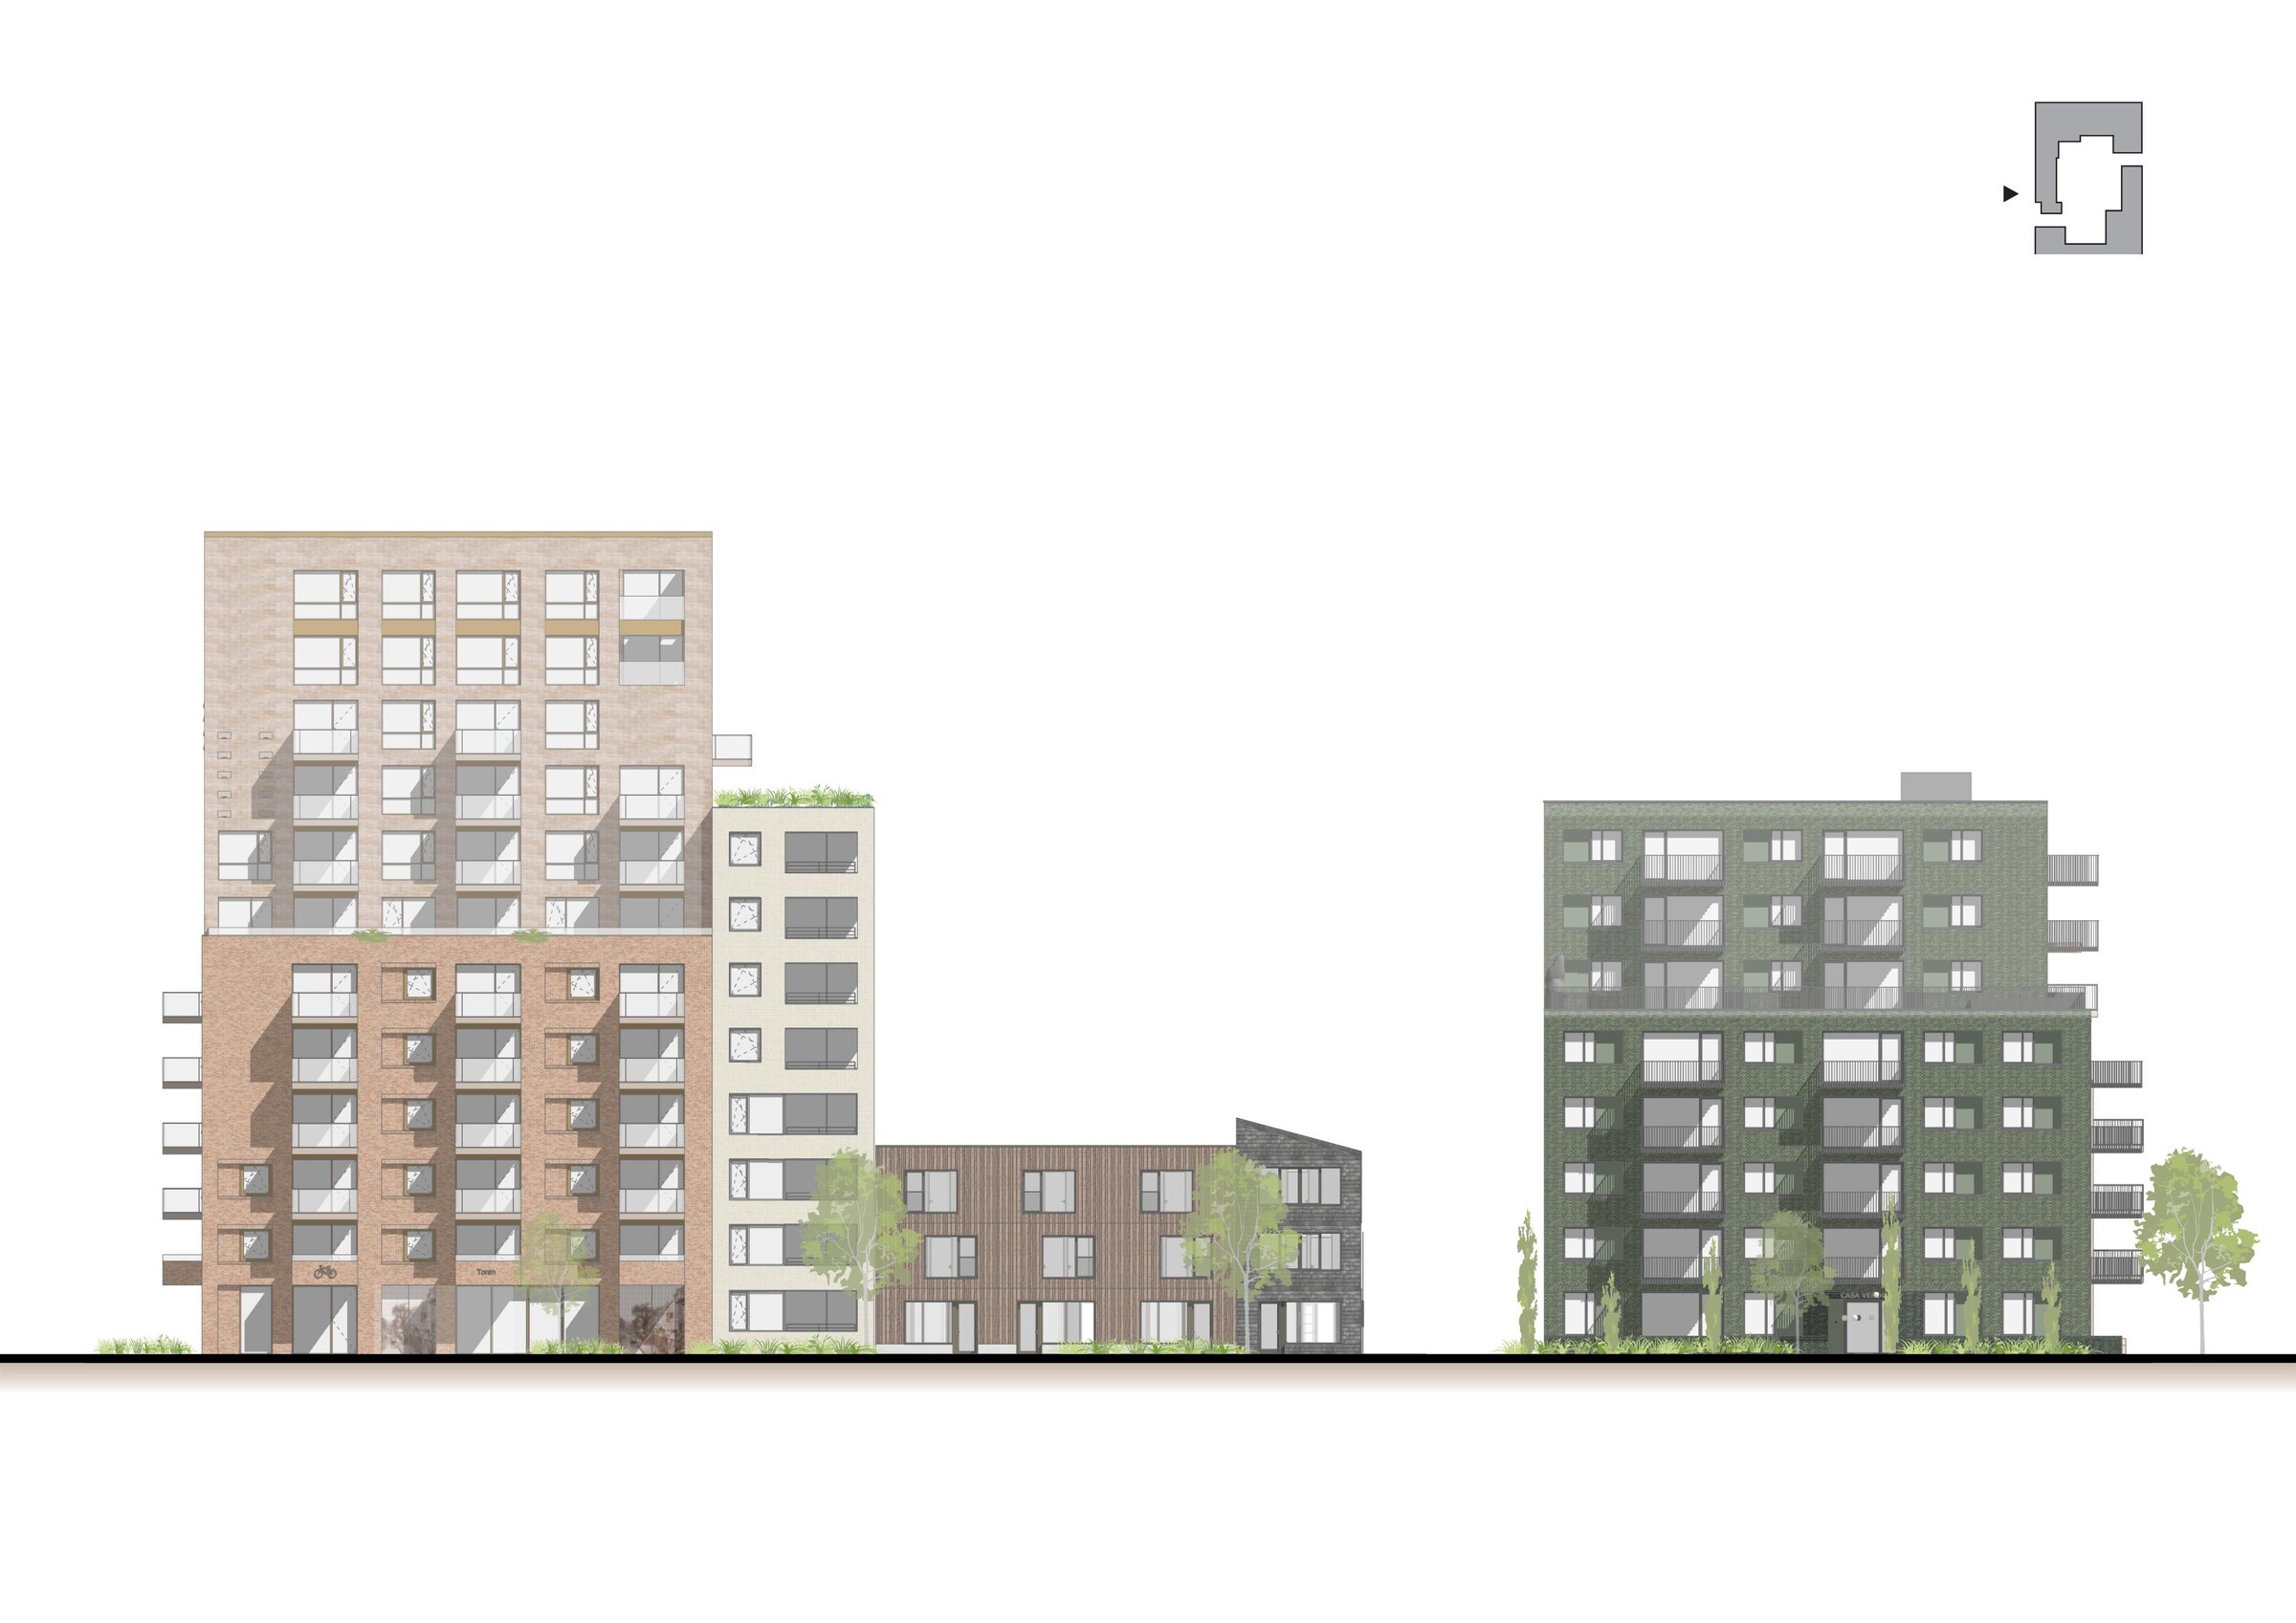 Zecc-Merwede-Kanaalzone-Housing-facade-1.jpg